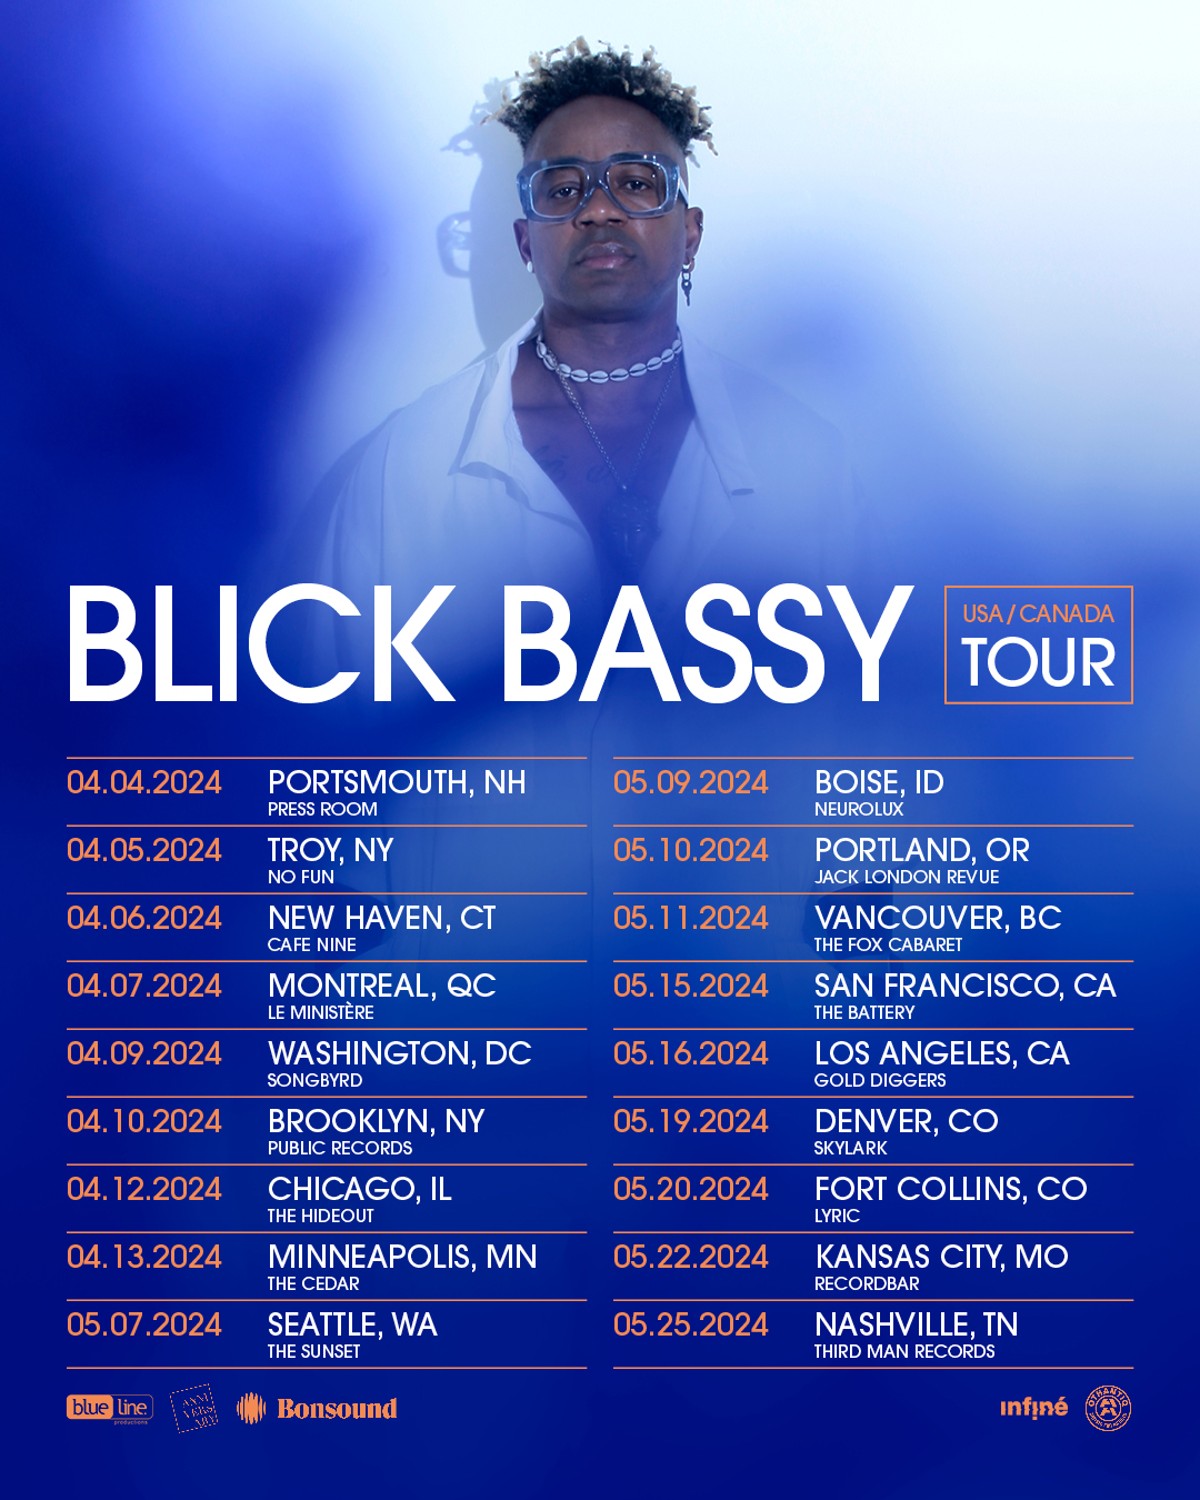 Bick Bassy 2024 tour poster